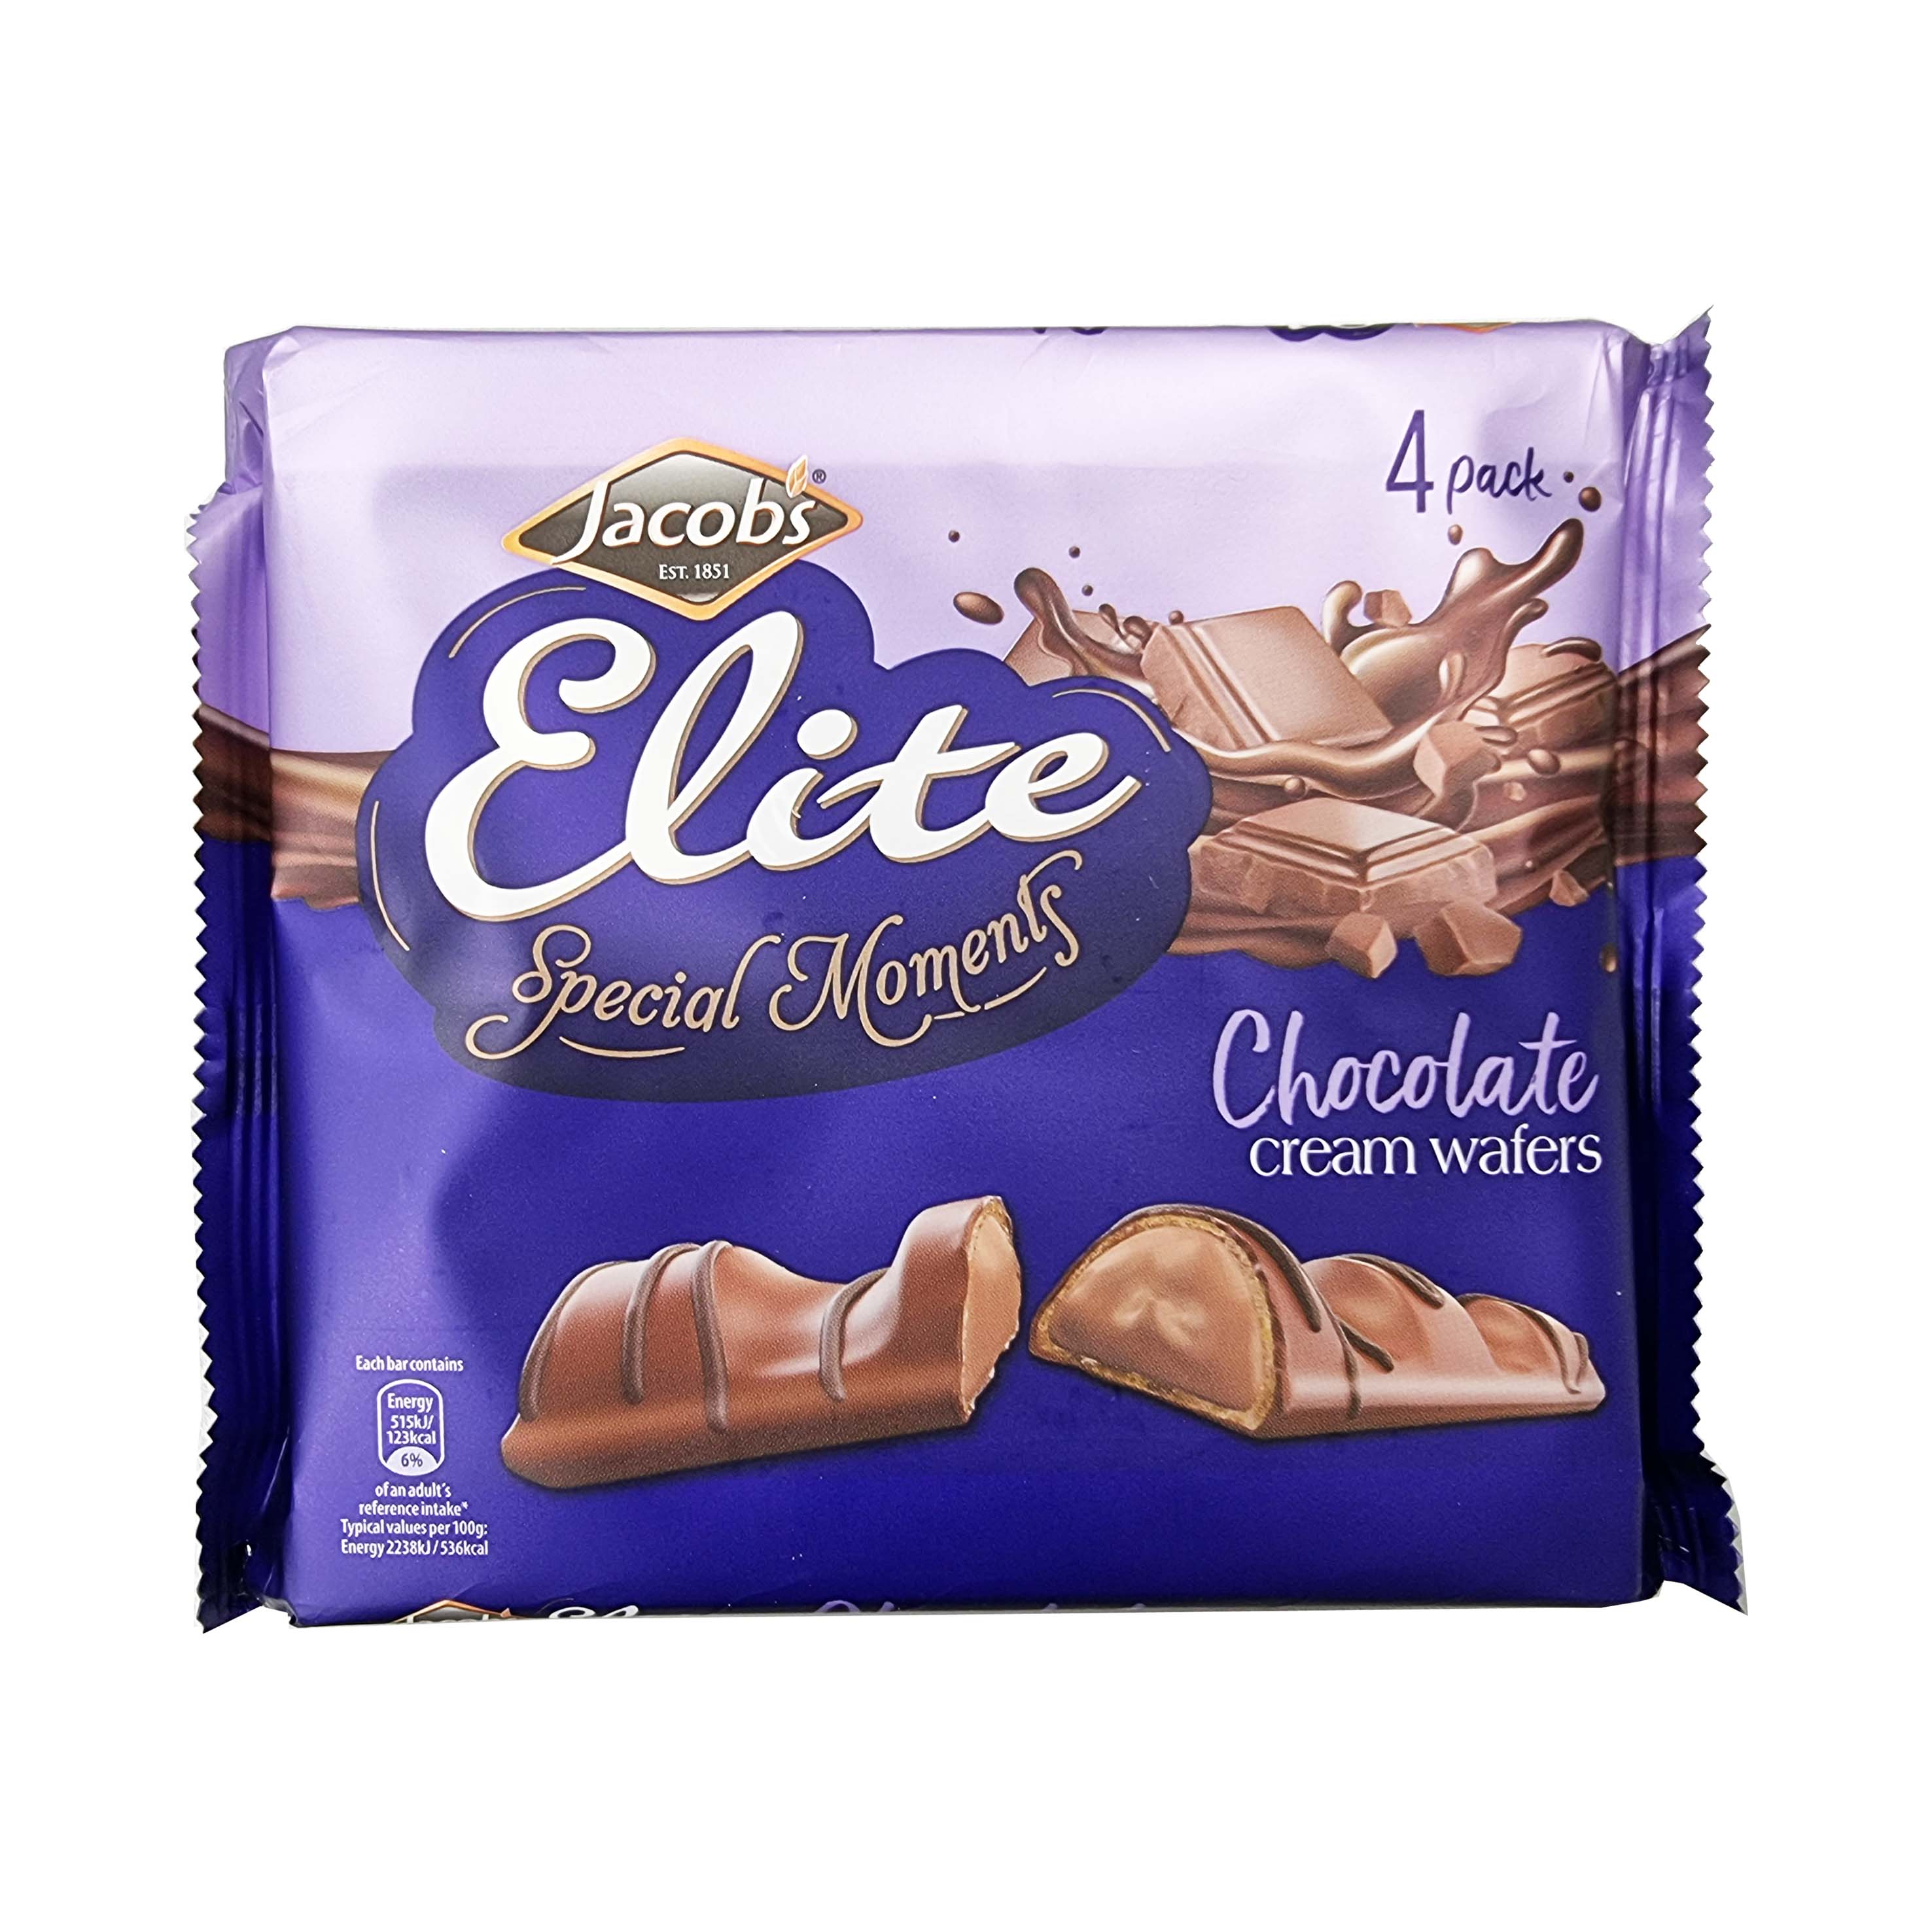 Jacobs galletas elite avellana-choco wafers 4x23g